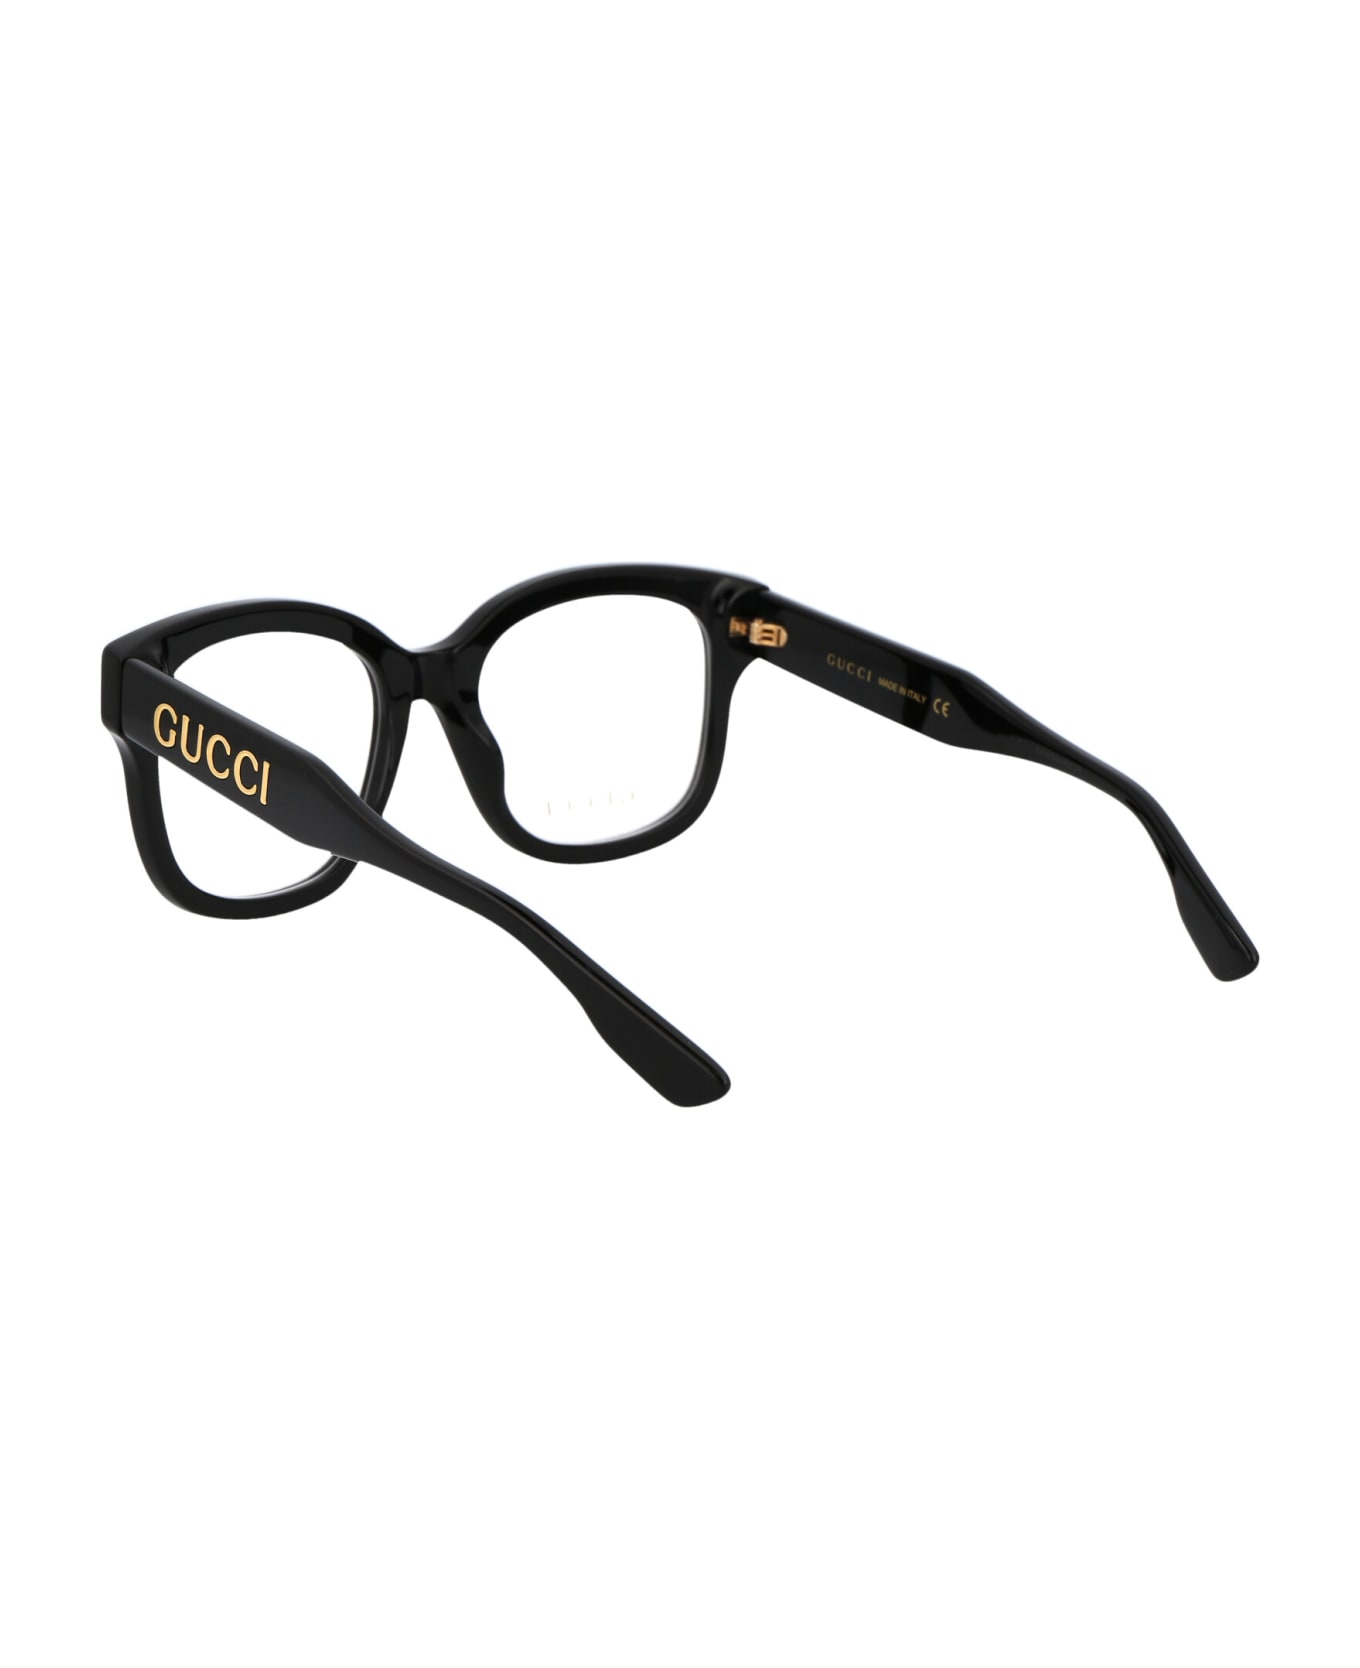 Gucci Eyewear Gg1155o Glasses - 001 BLACK BLACK TRANSPARENT